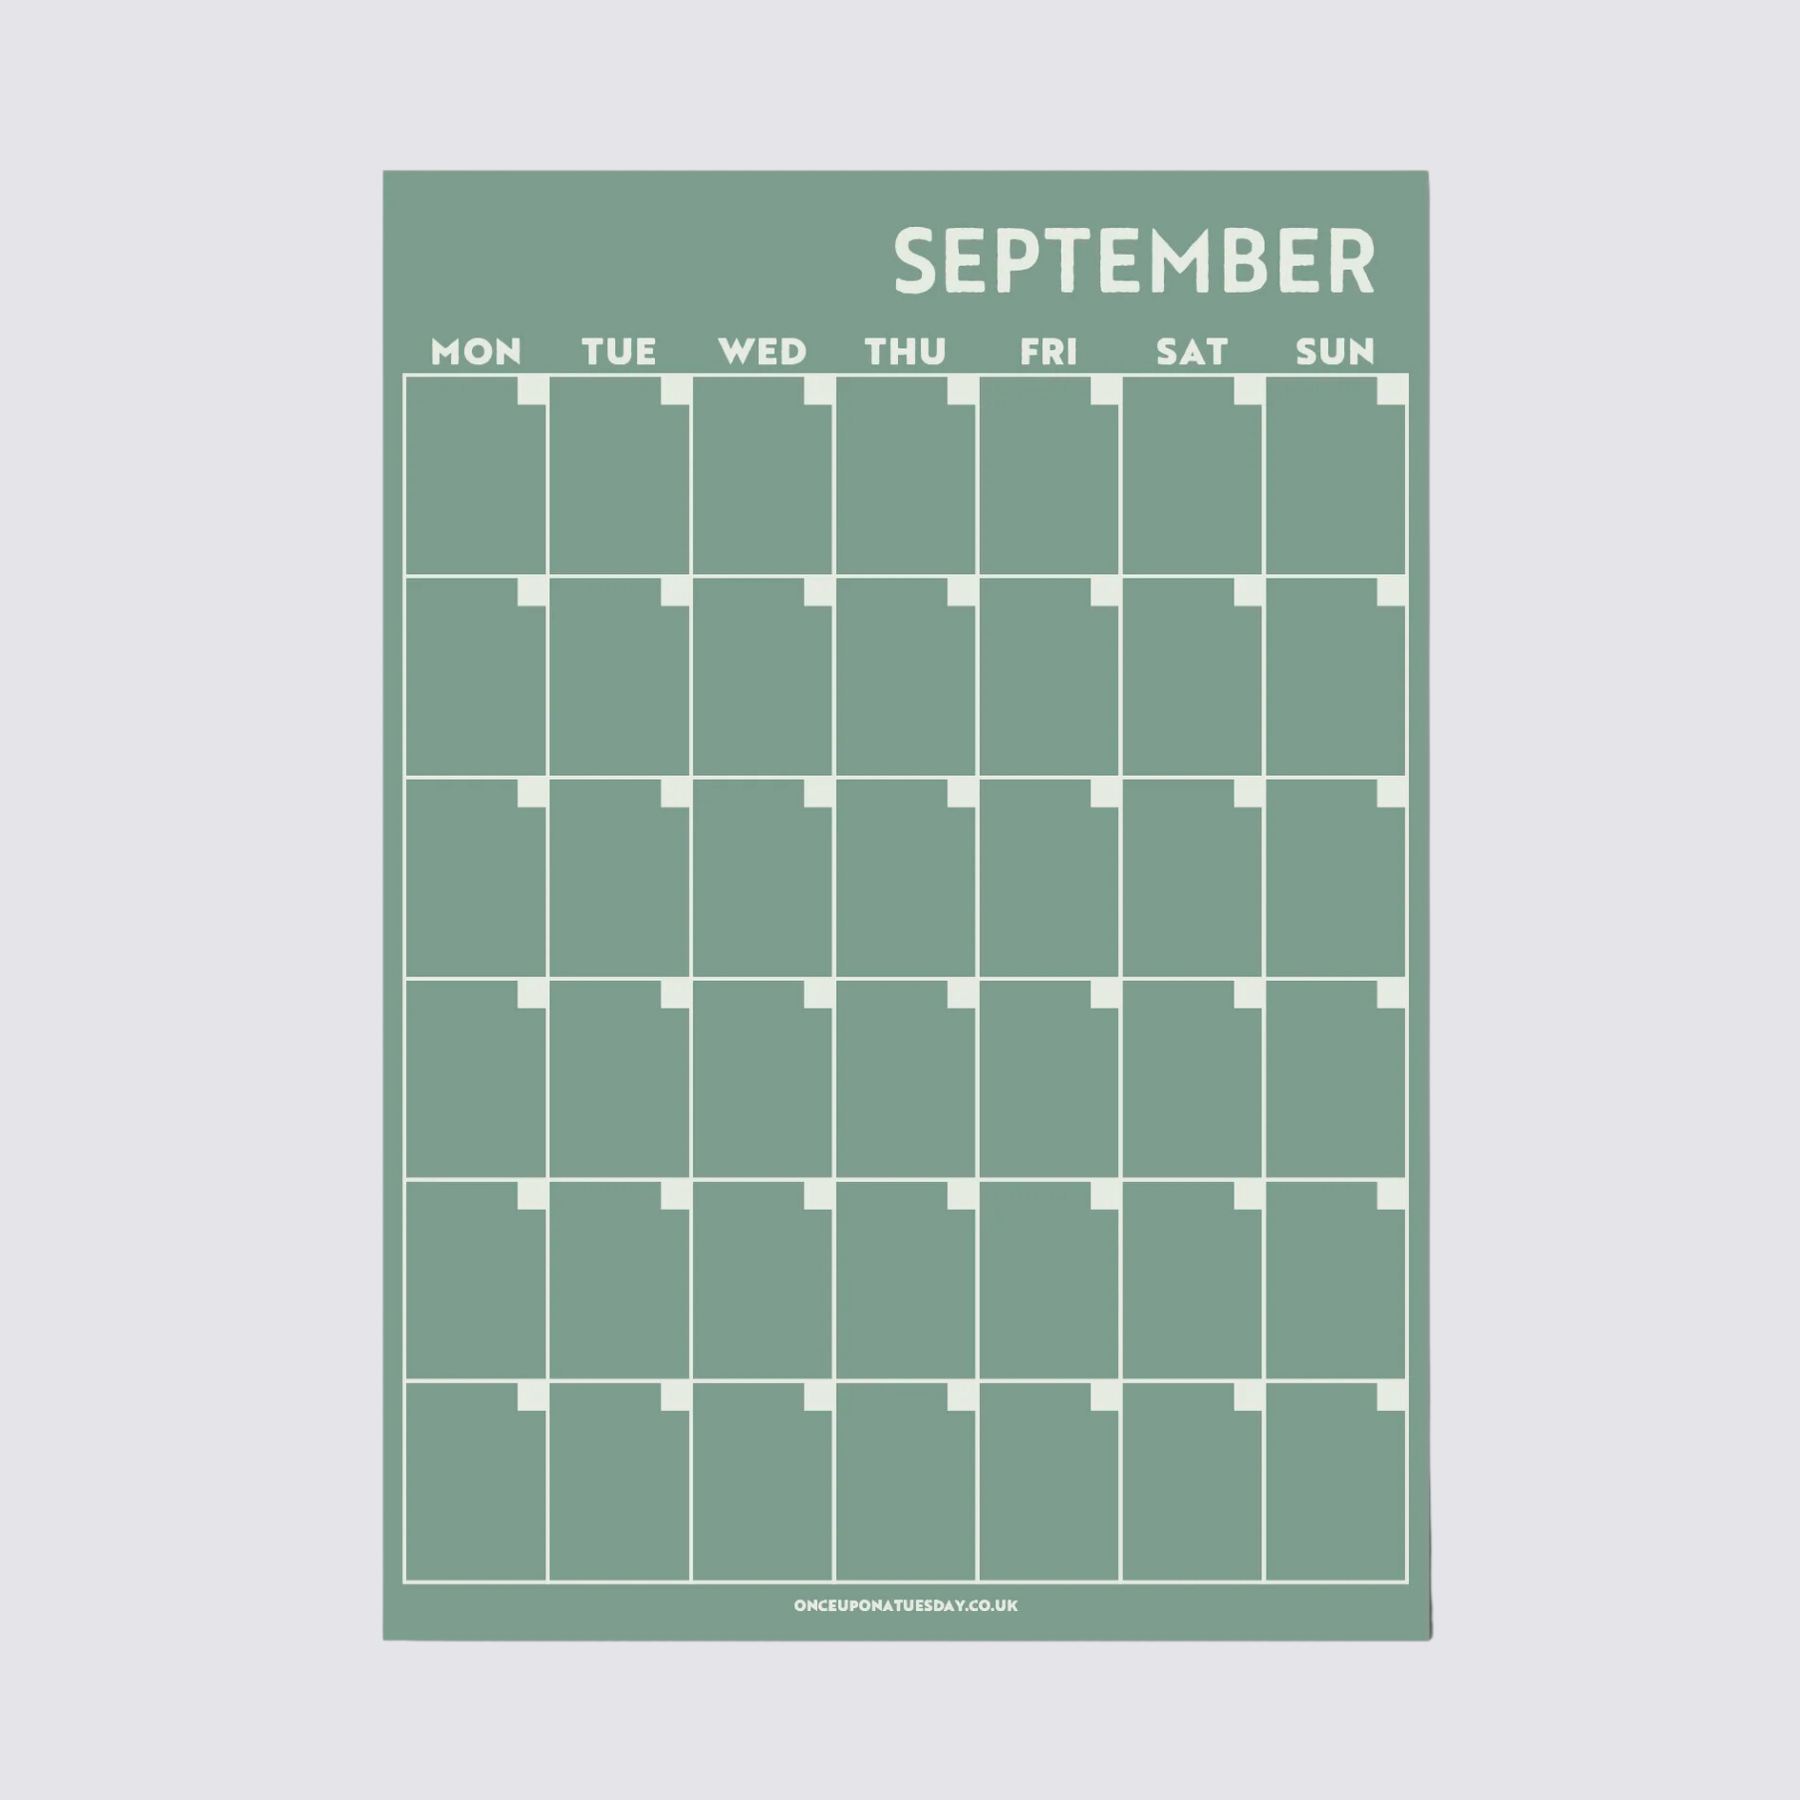 Monthly calendar wall planner